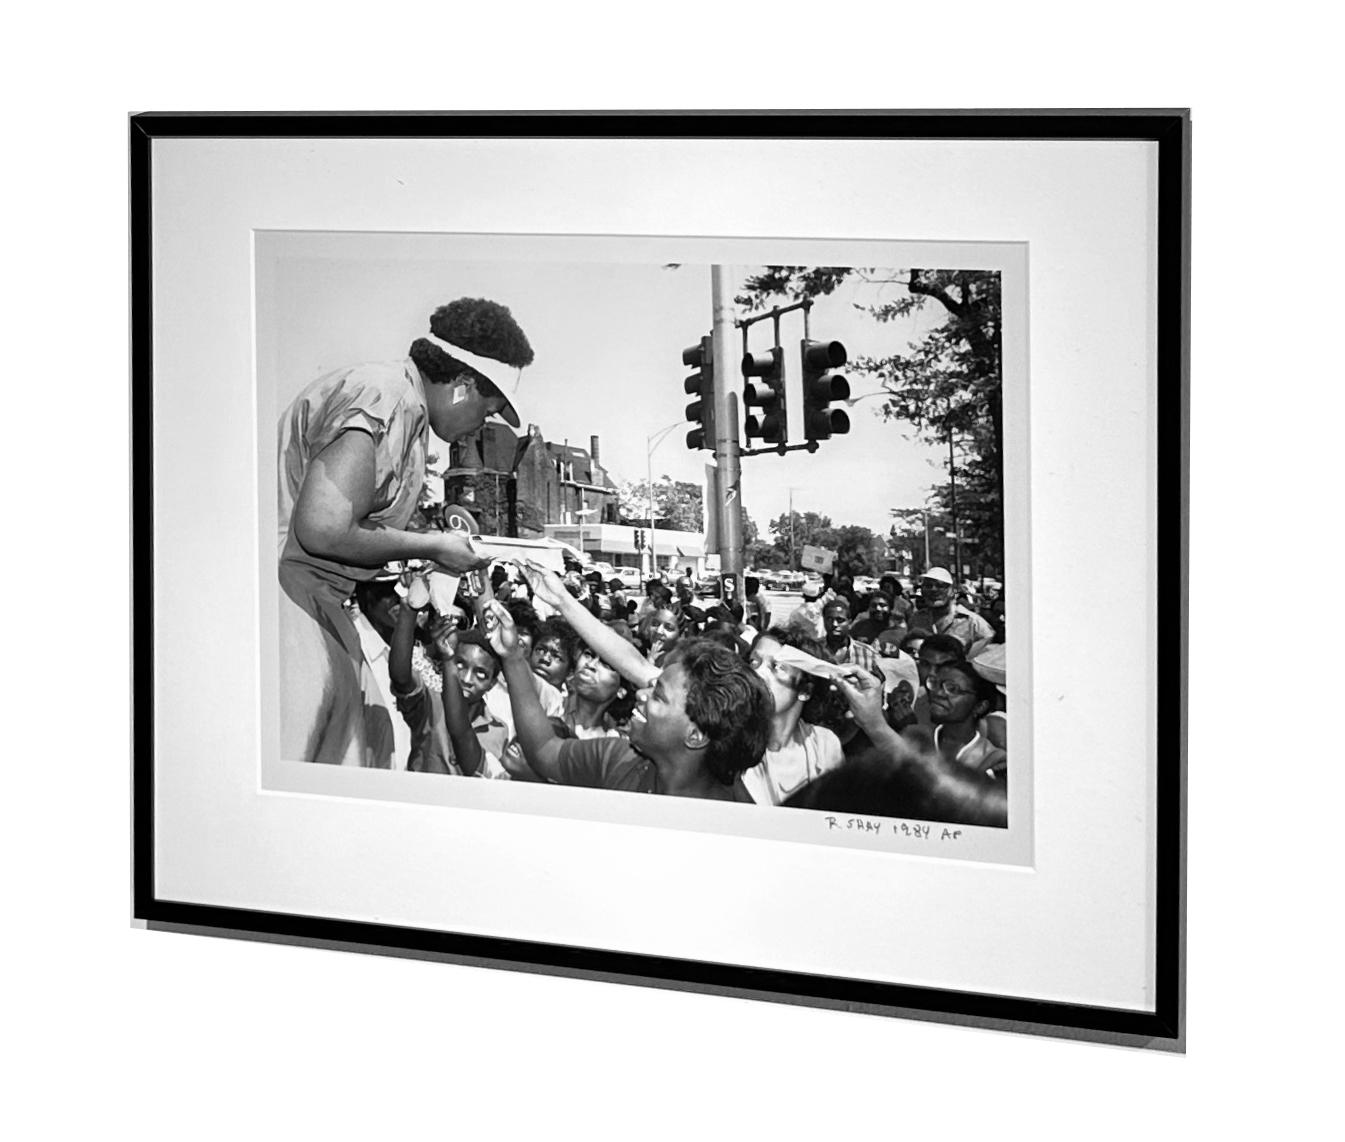 Oprah Winfrey at the Bud Billiken Parade in Chicago, 1984 - Black & White Photo - Photograph by Richard Shay